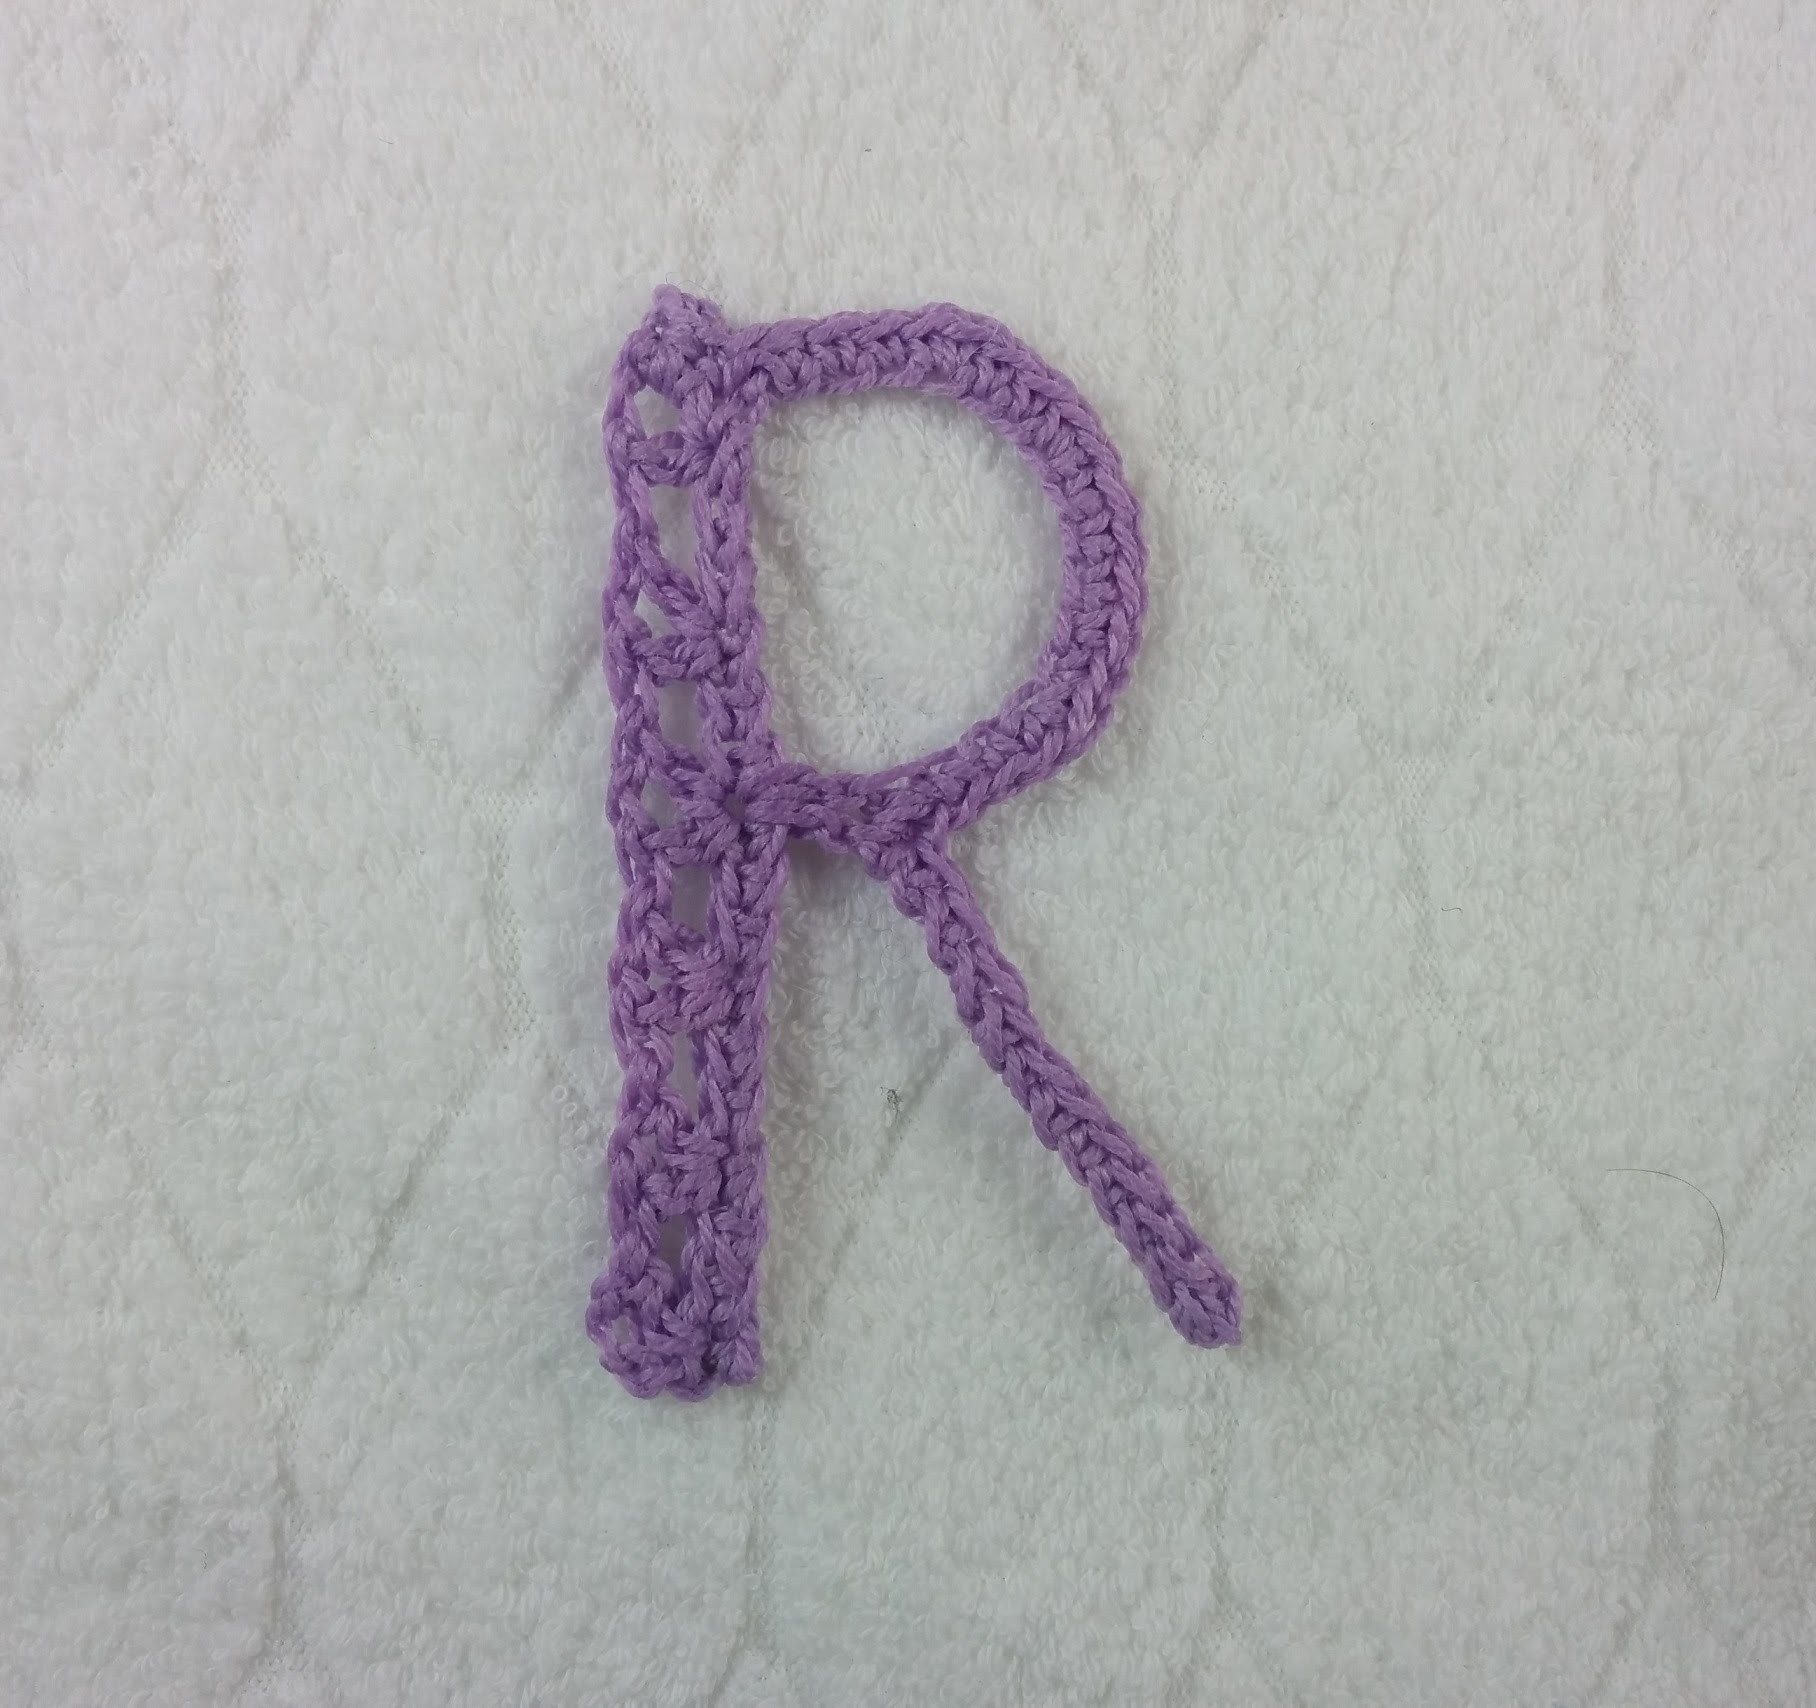 Alfabeto all'uncinetto: lettera R - Crochet Alphabet: letter R